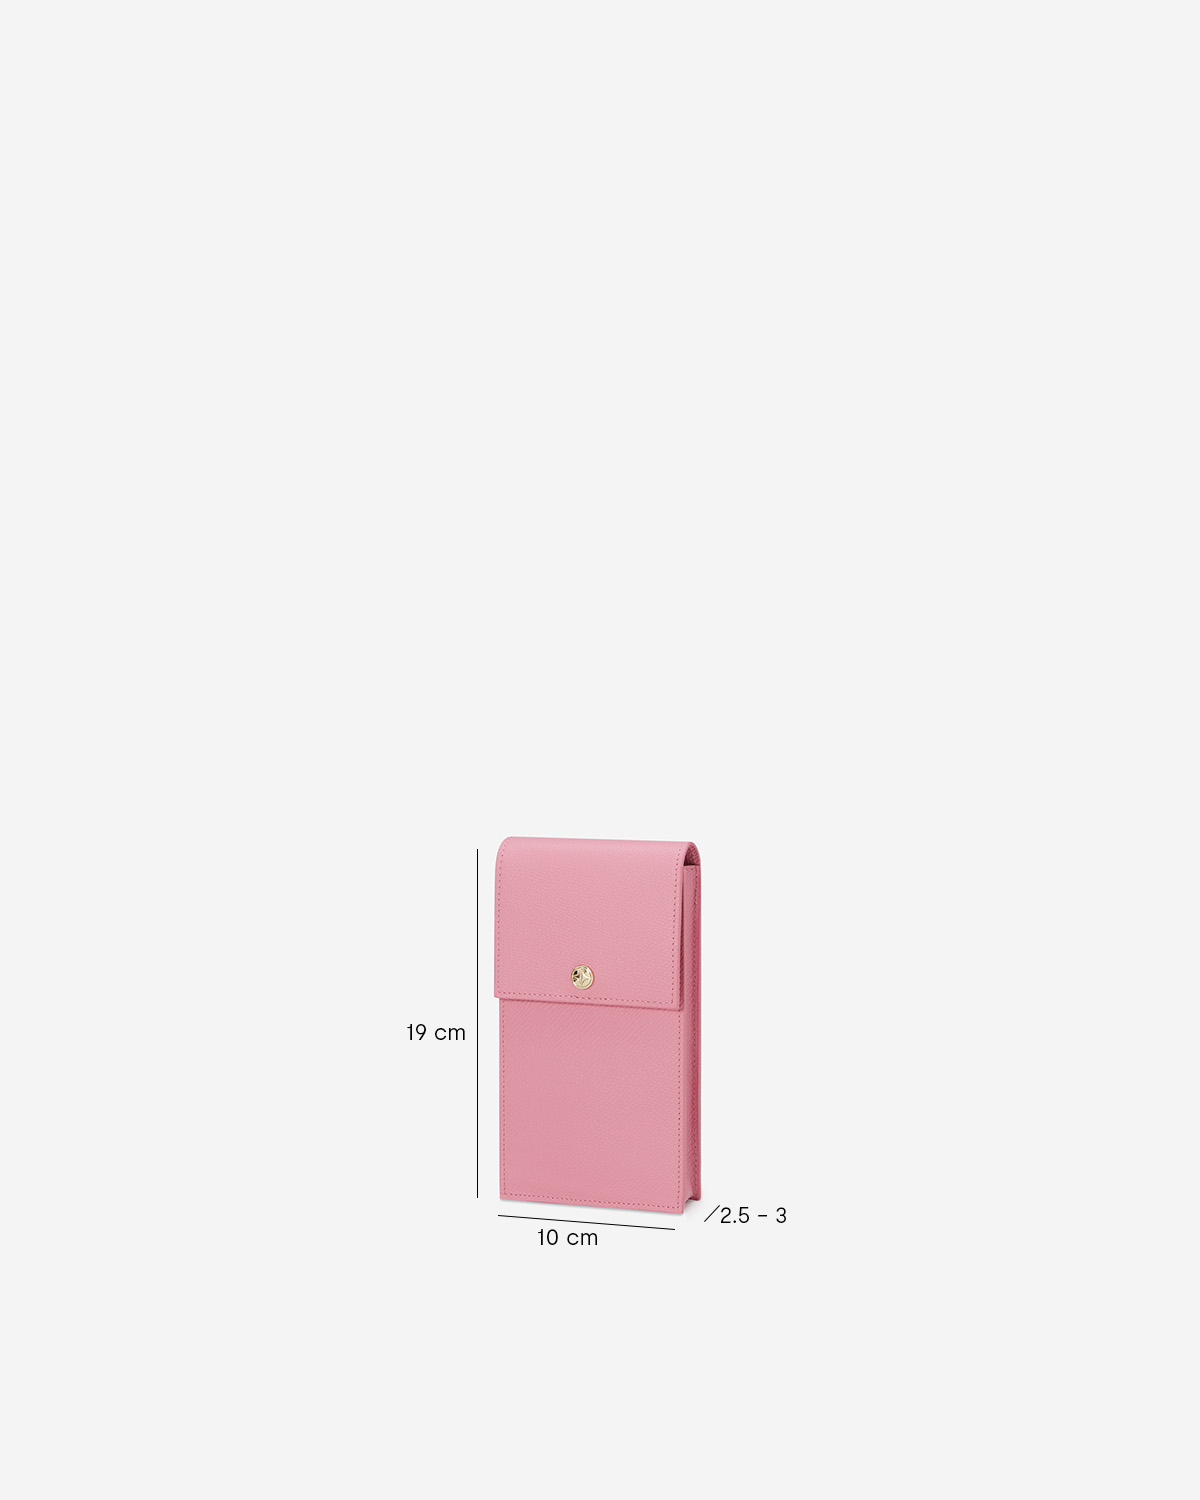 VERA Emily Phone Pouch with Leather Gold Chain in Creative Pink กระเป๋าใส่โทรศัพท์หนังแท้ พร้อมฟังก์ชั่นกระเป๋าสตางค์ มาพร้อมสายสะพายโซ่หนังถอดได้ สีชมพู